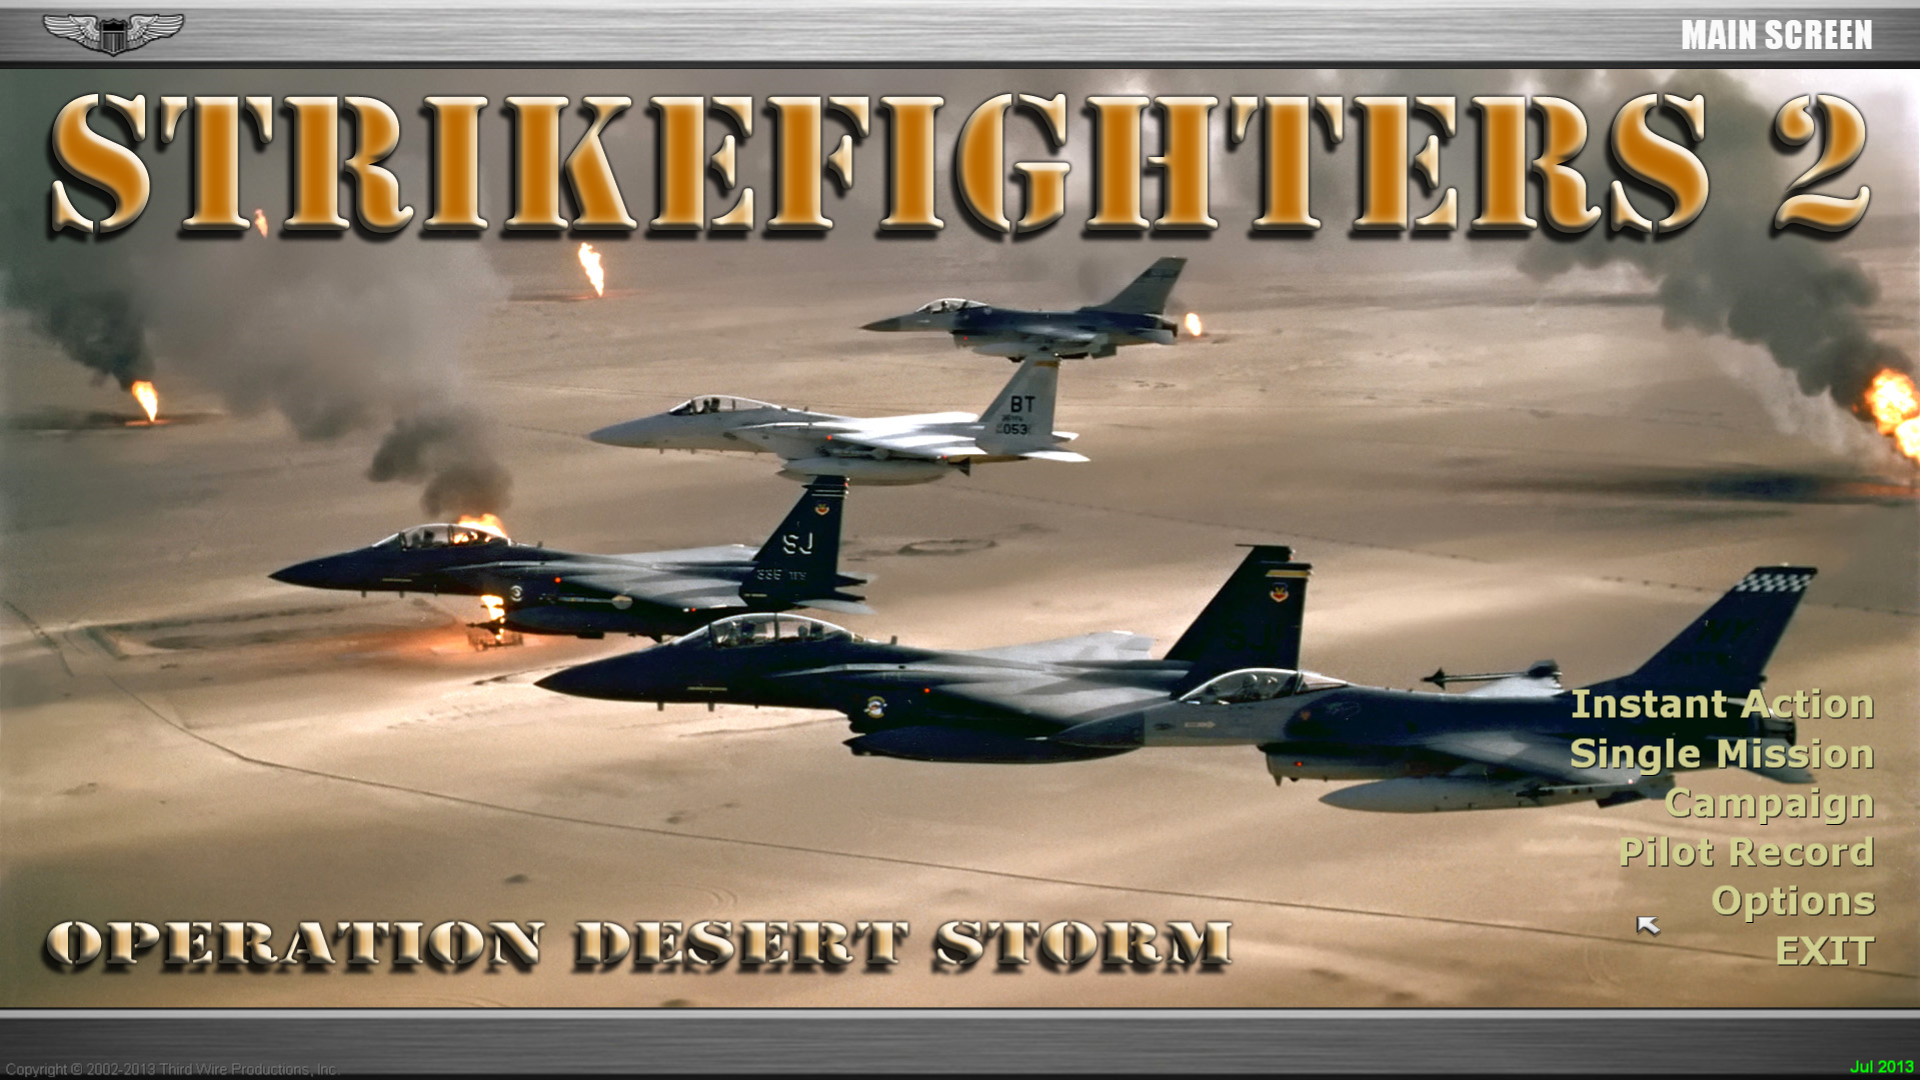 StrikeFighters2 Desert Storm Hi-Res 1920x1080 Menu Screens!